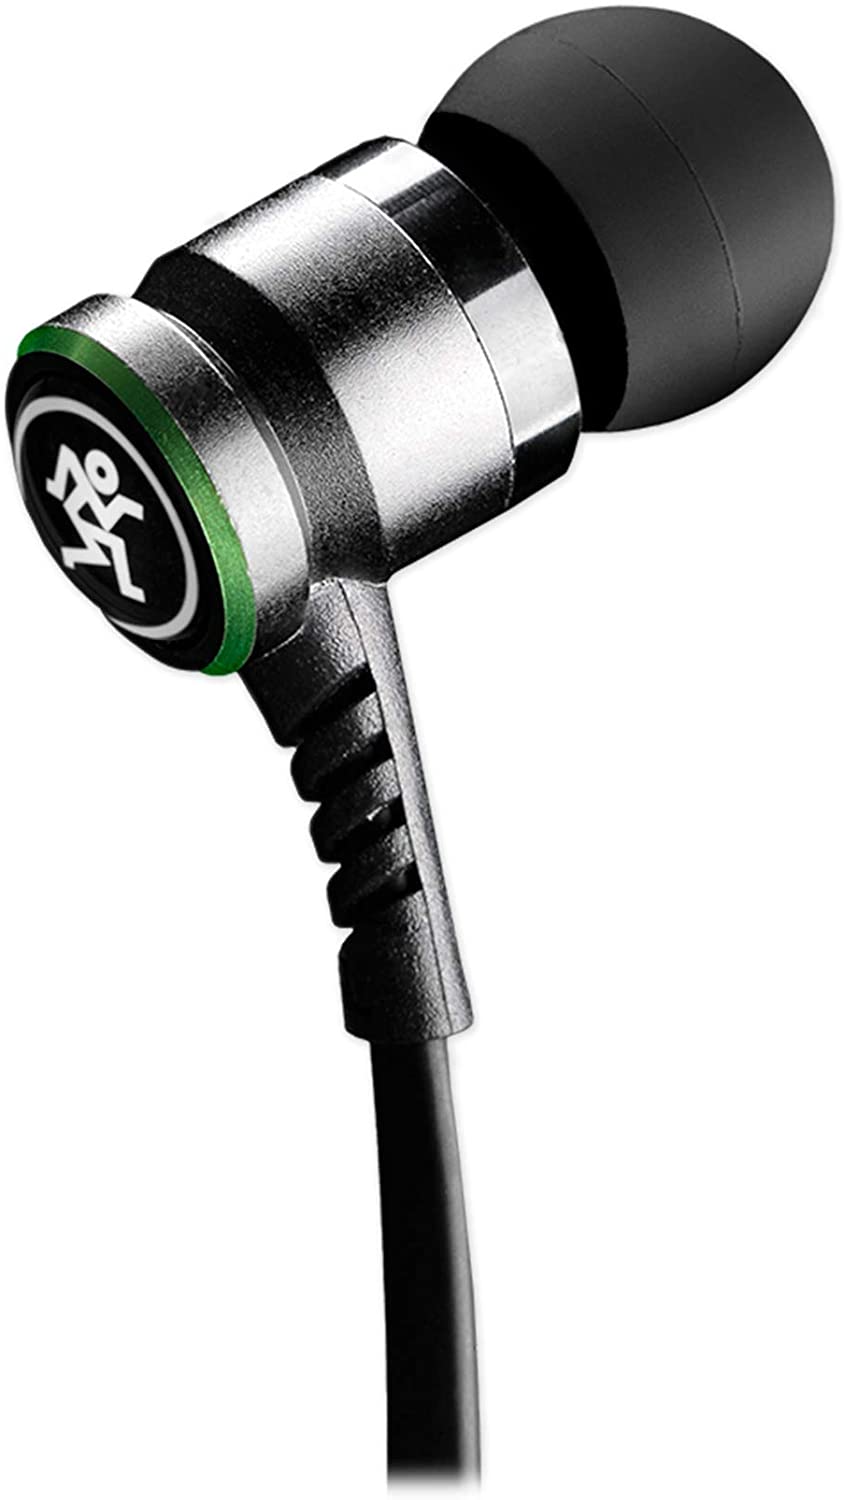 Mackie CR BUDS Studio Quality Earphones Ear Buds Headphones with Mic & Controls